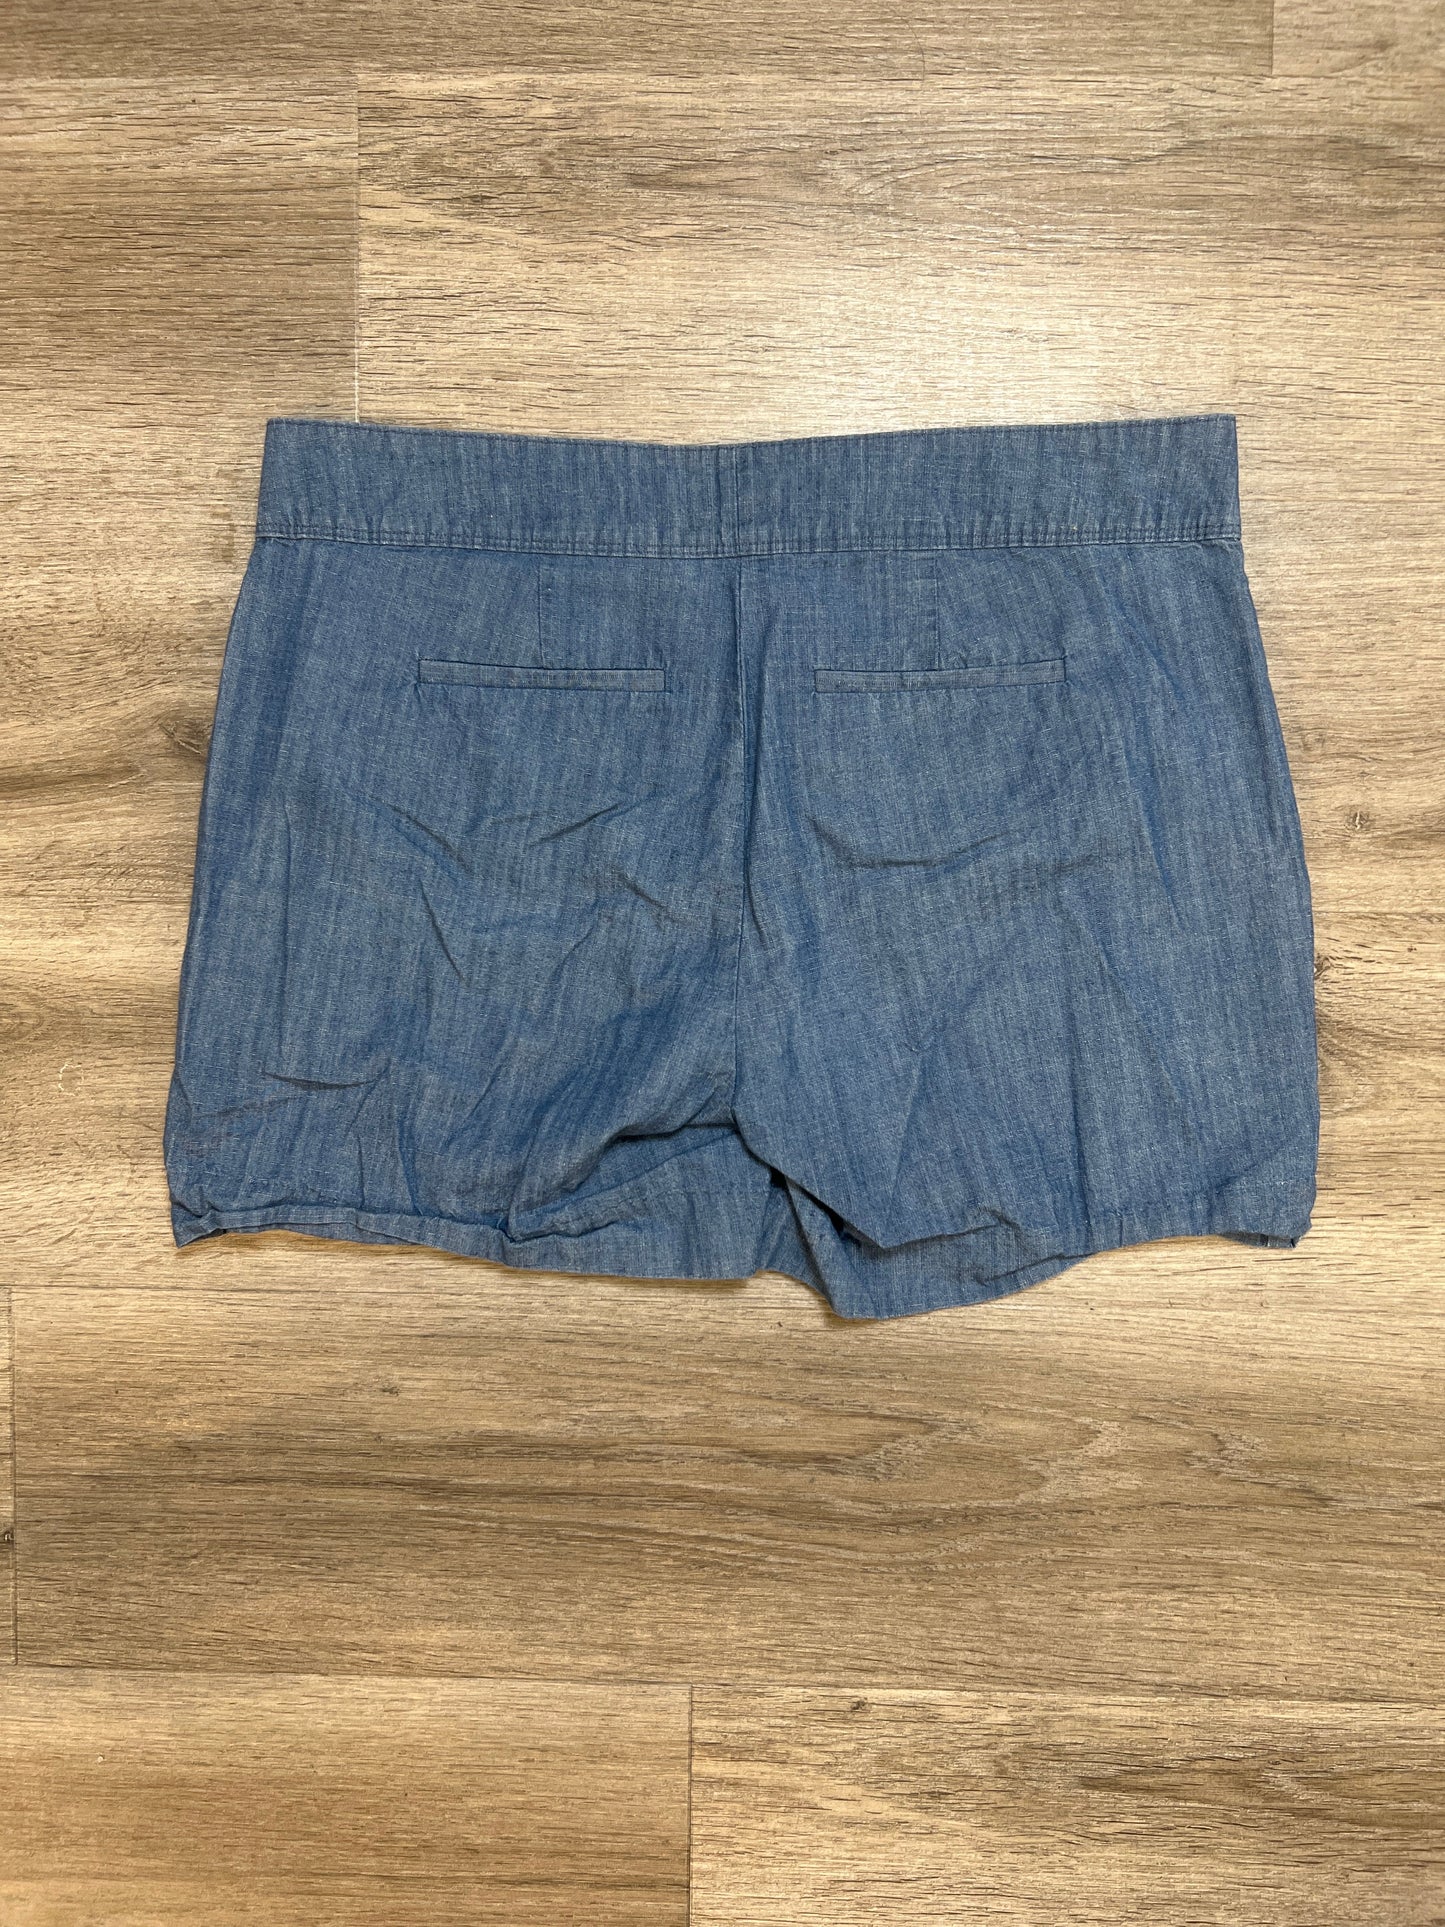 Shorts By Isaac Mizrahi  Size: S